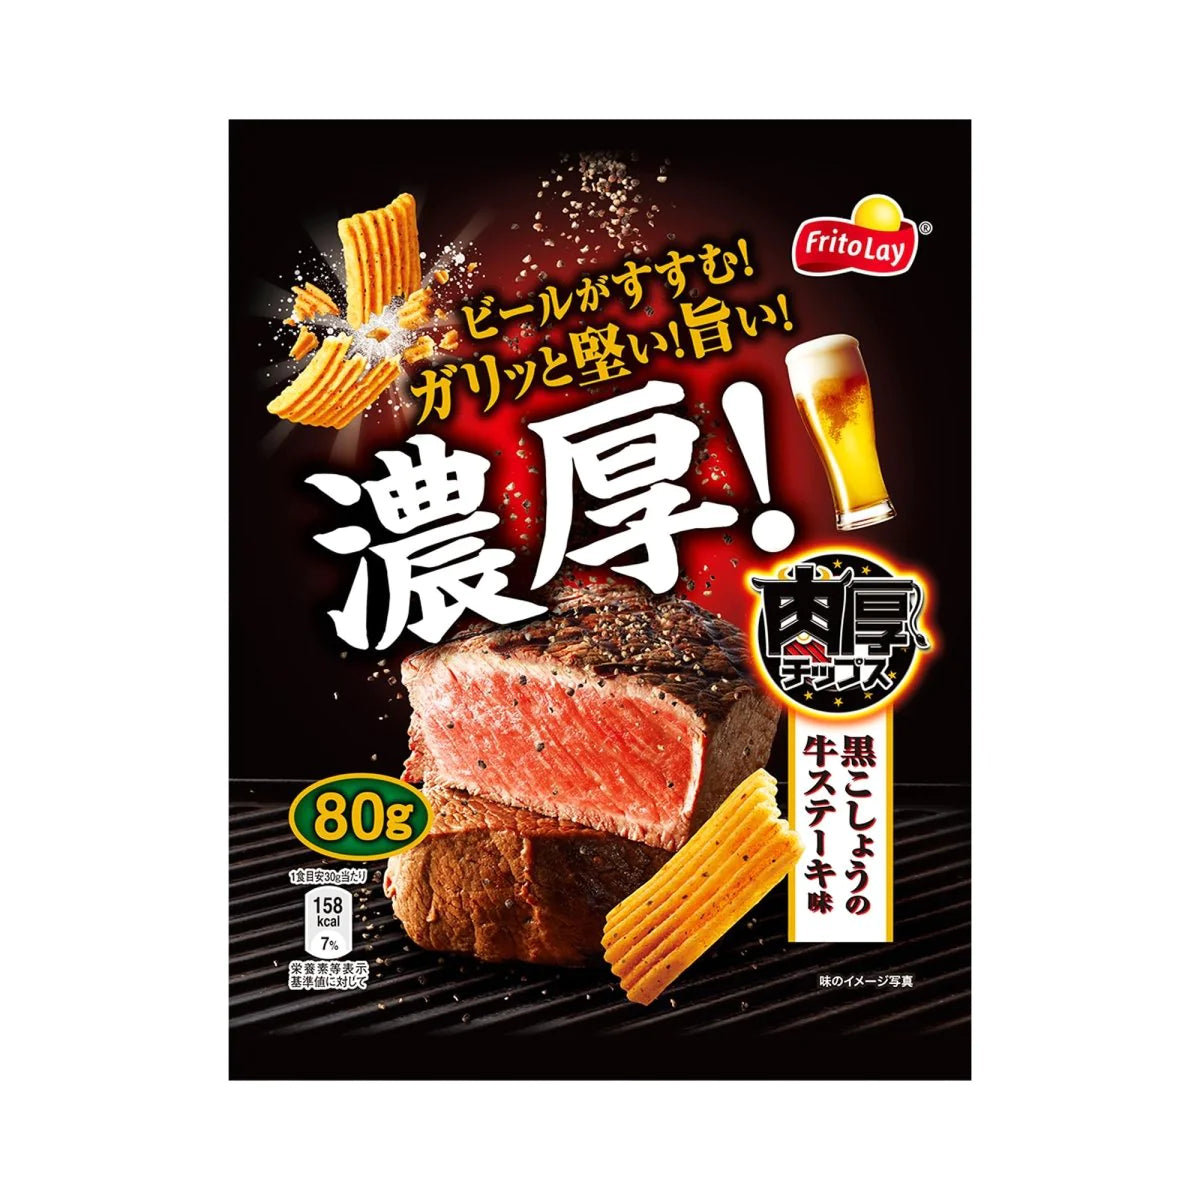 Frito Lay's Black Pepper Steak Flavour Crisps (Japan) 80g